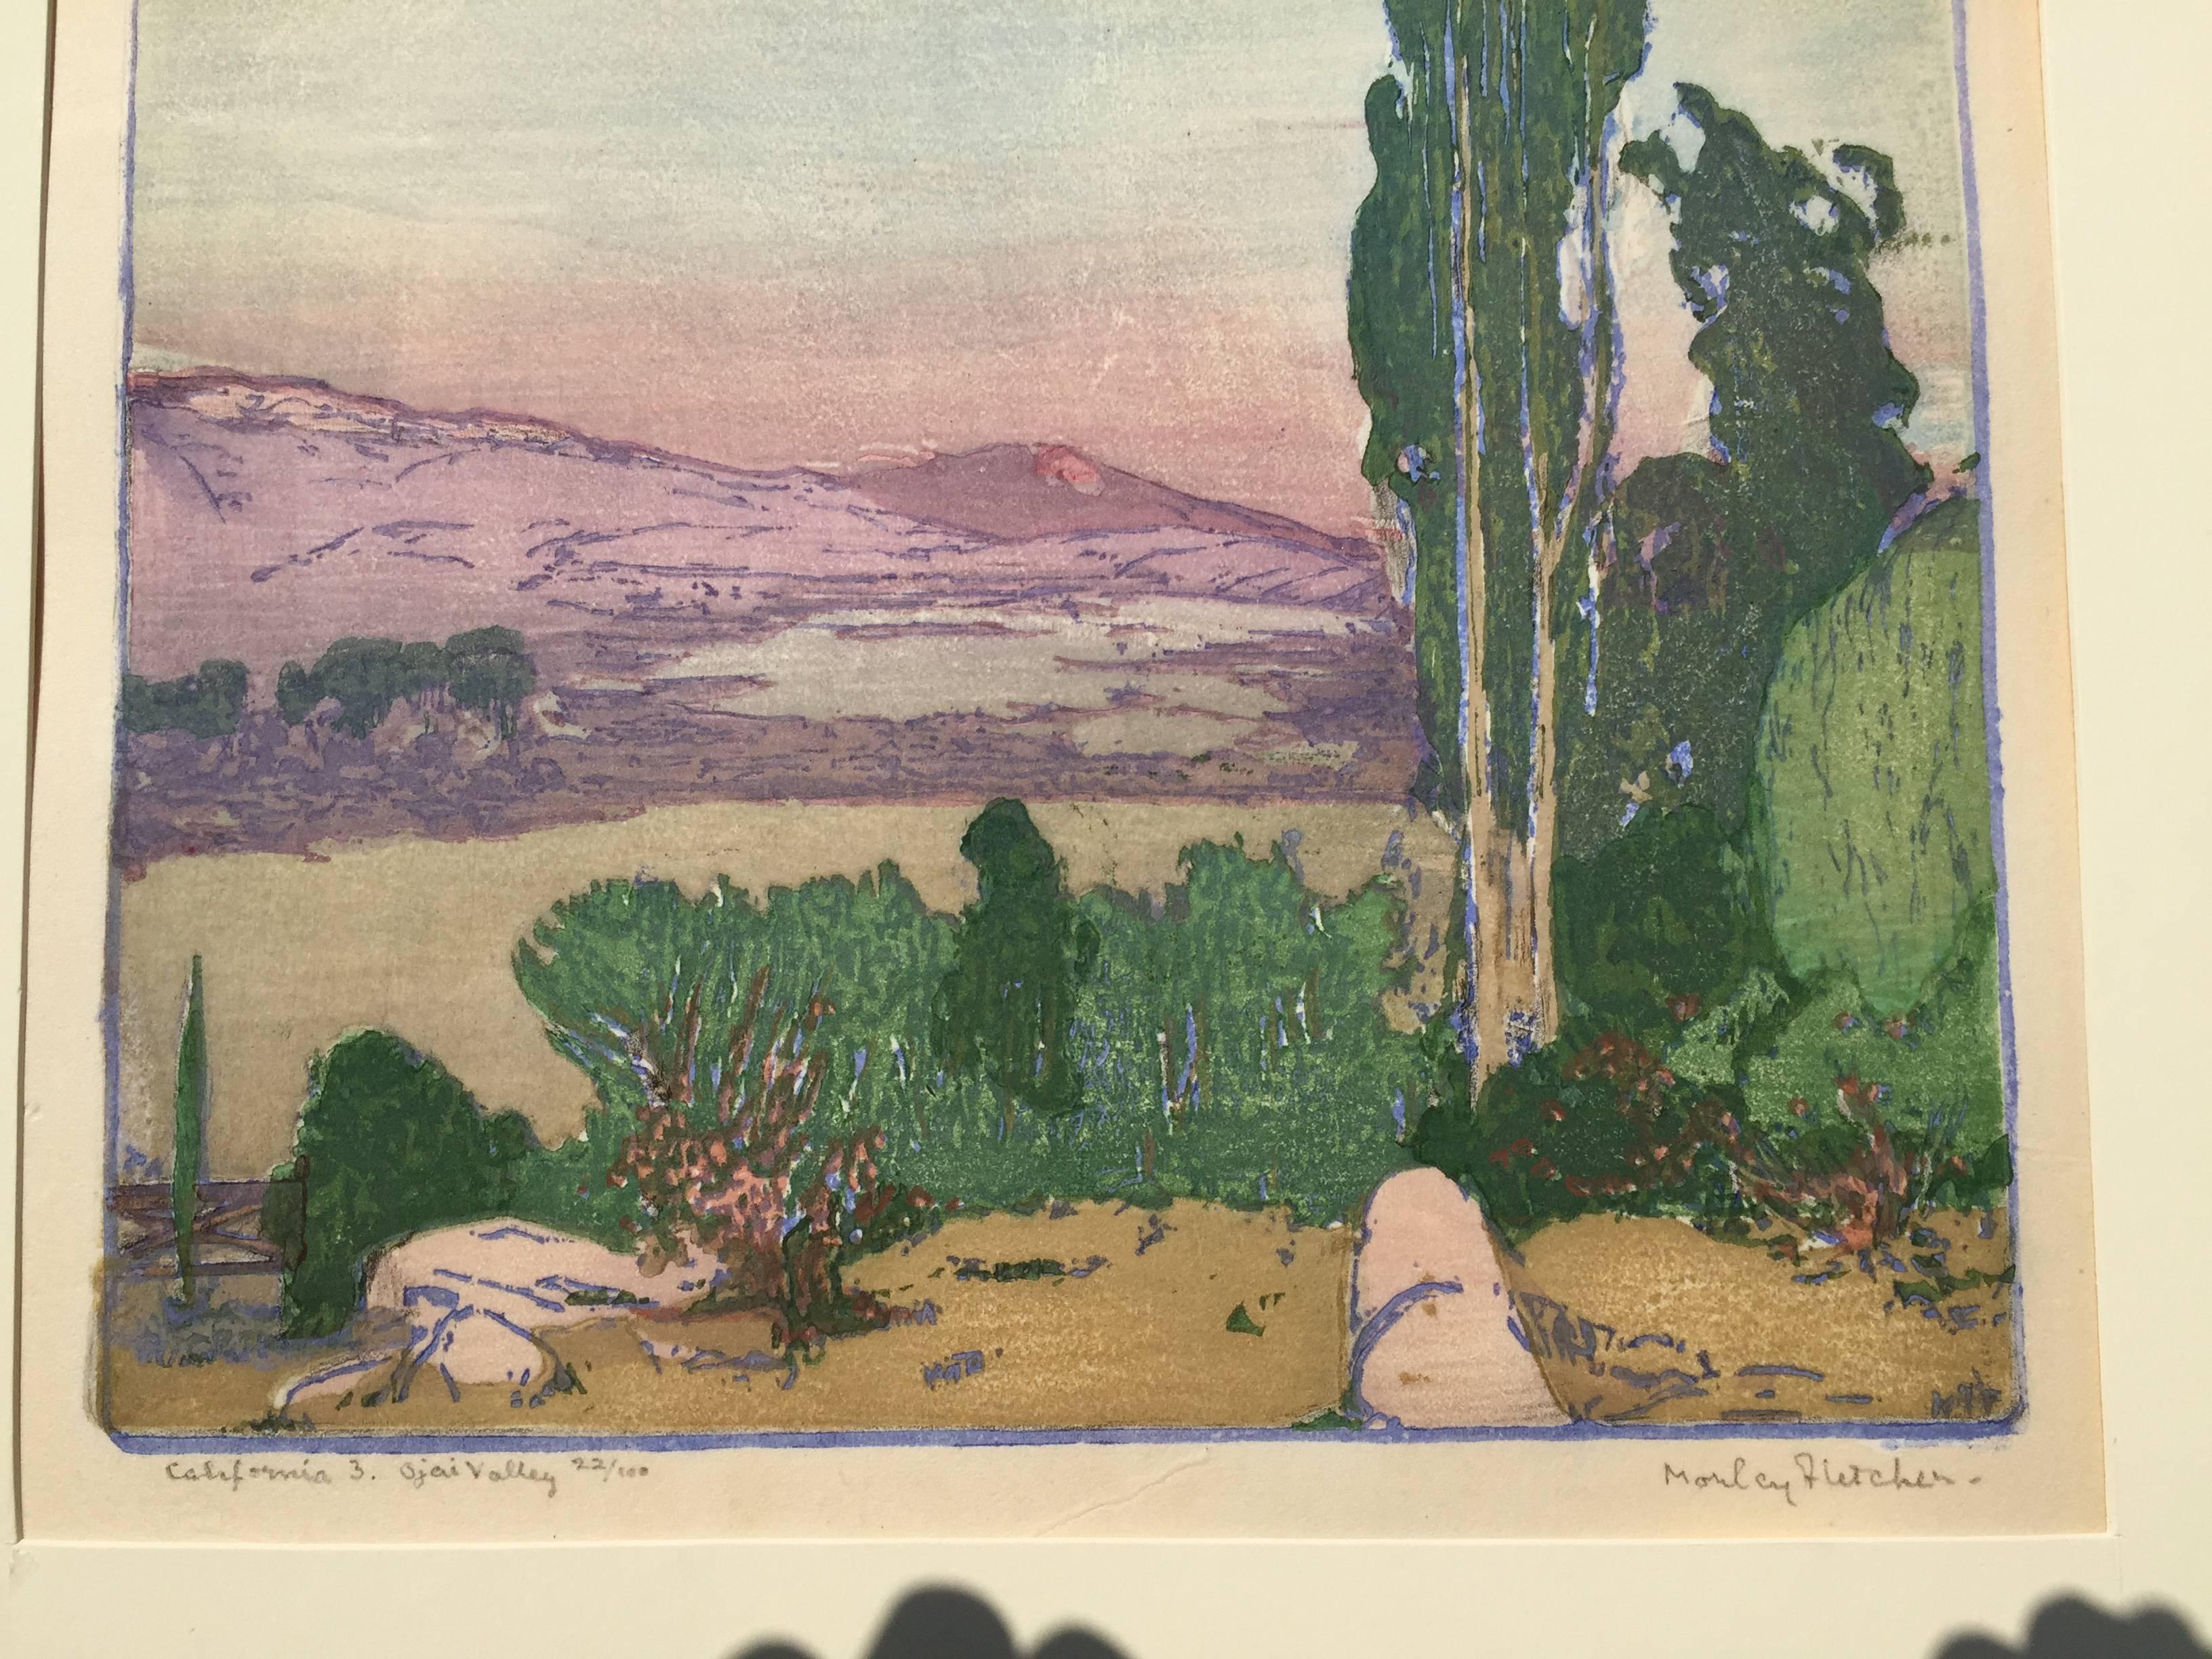 California - 3 - Ojai Valley - American Impressionist Print by Frank Morley Fletcher